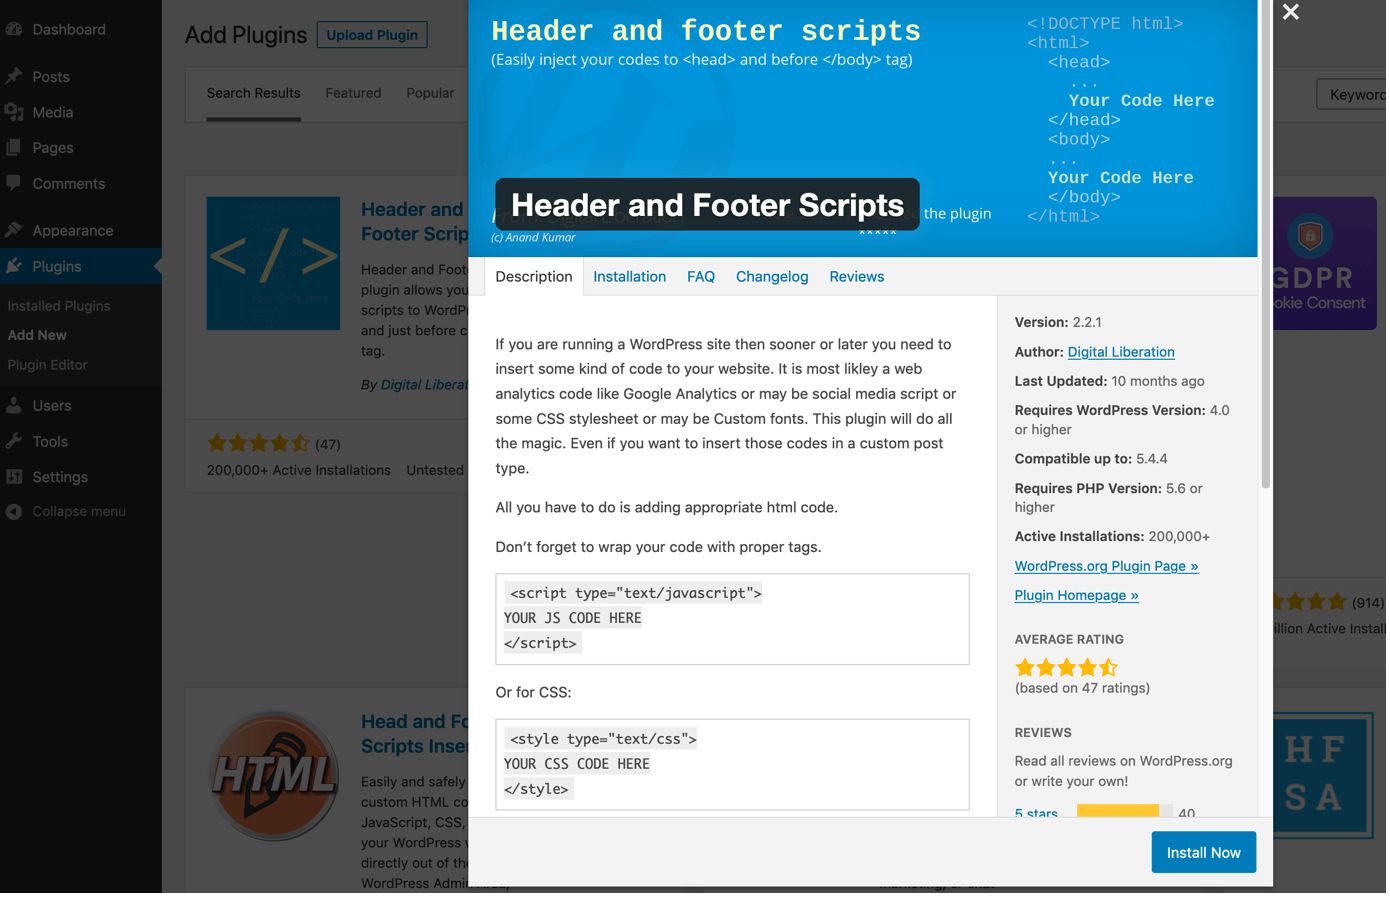 Installare il plugin “Header and Footer Scripts”